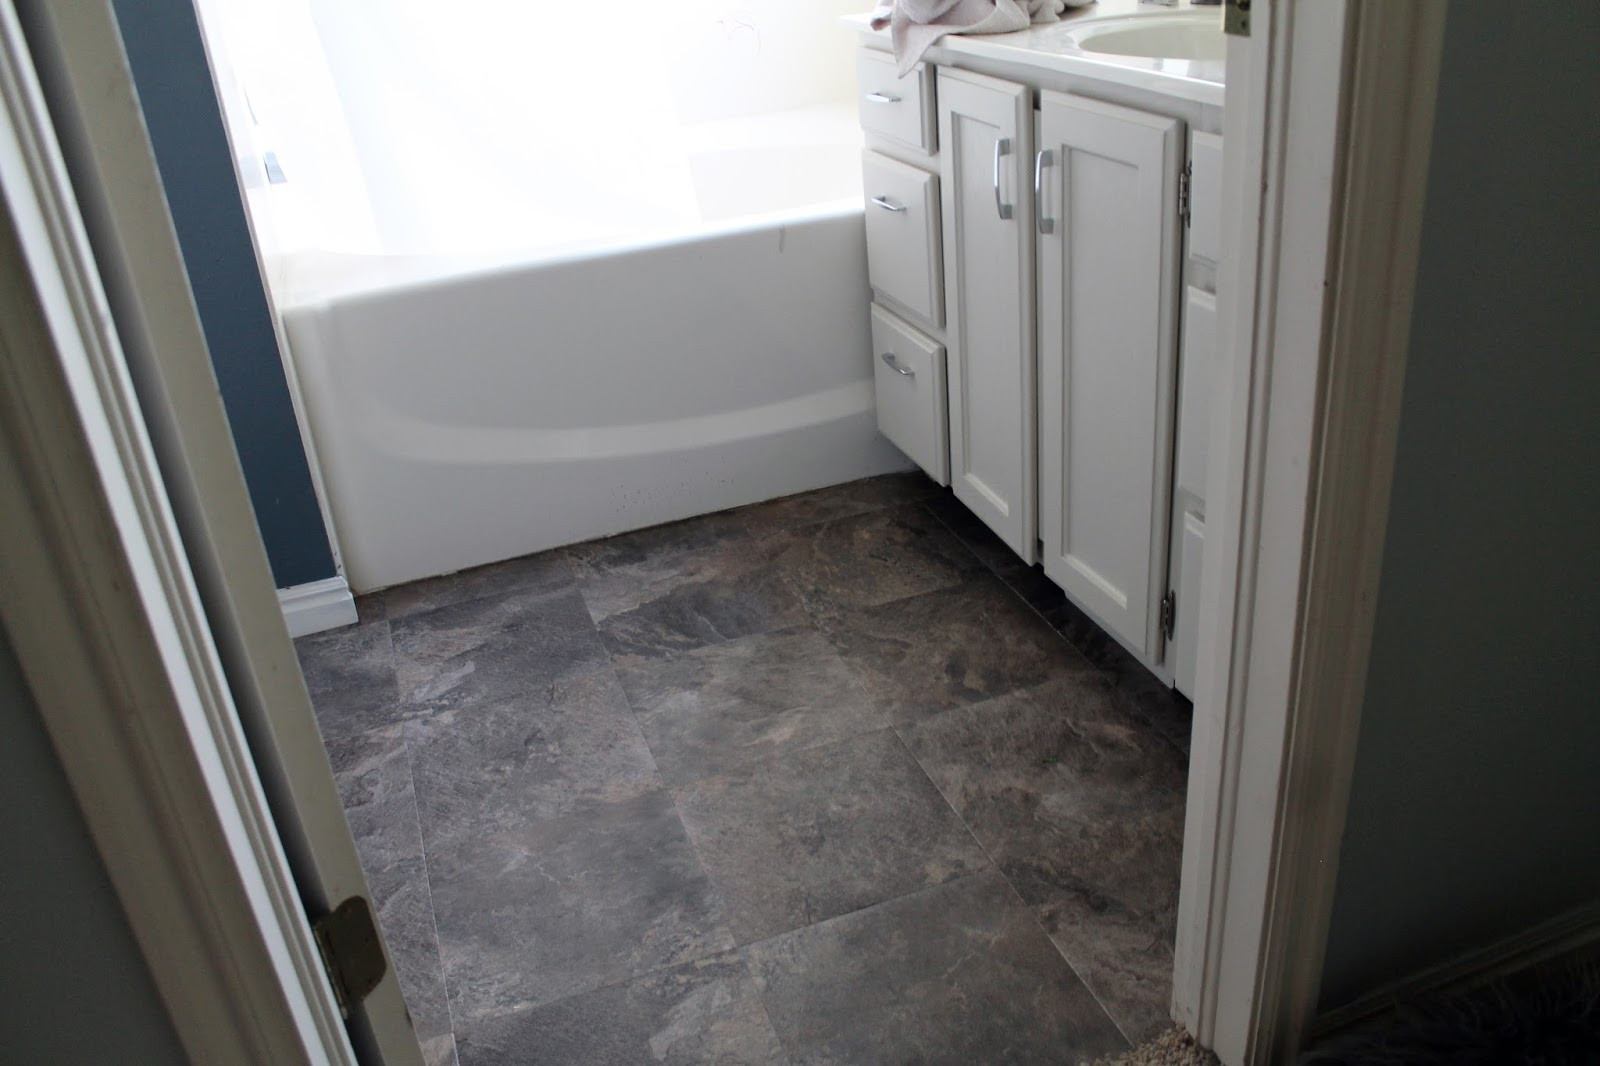 Adhesive Bathroom Tiles
 How To Lay Self Adhesive Floor Tiles In Bathroom